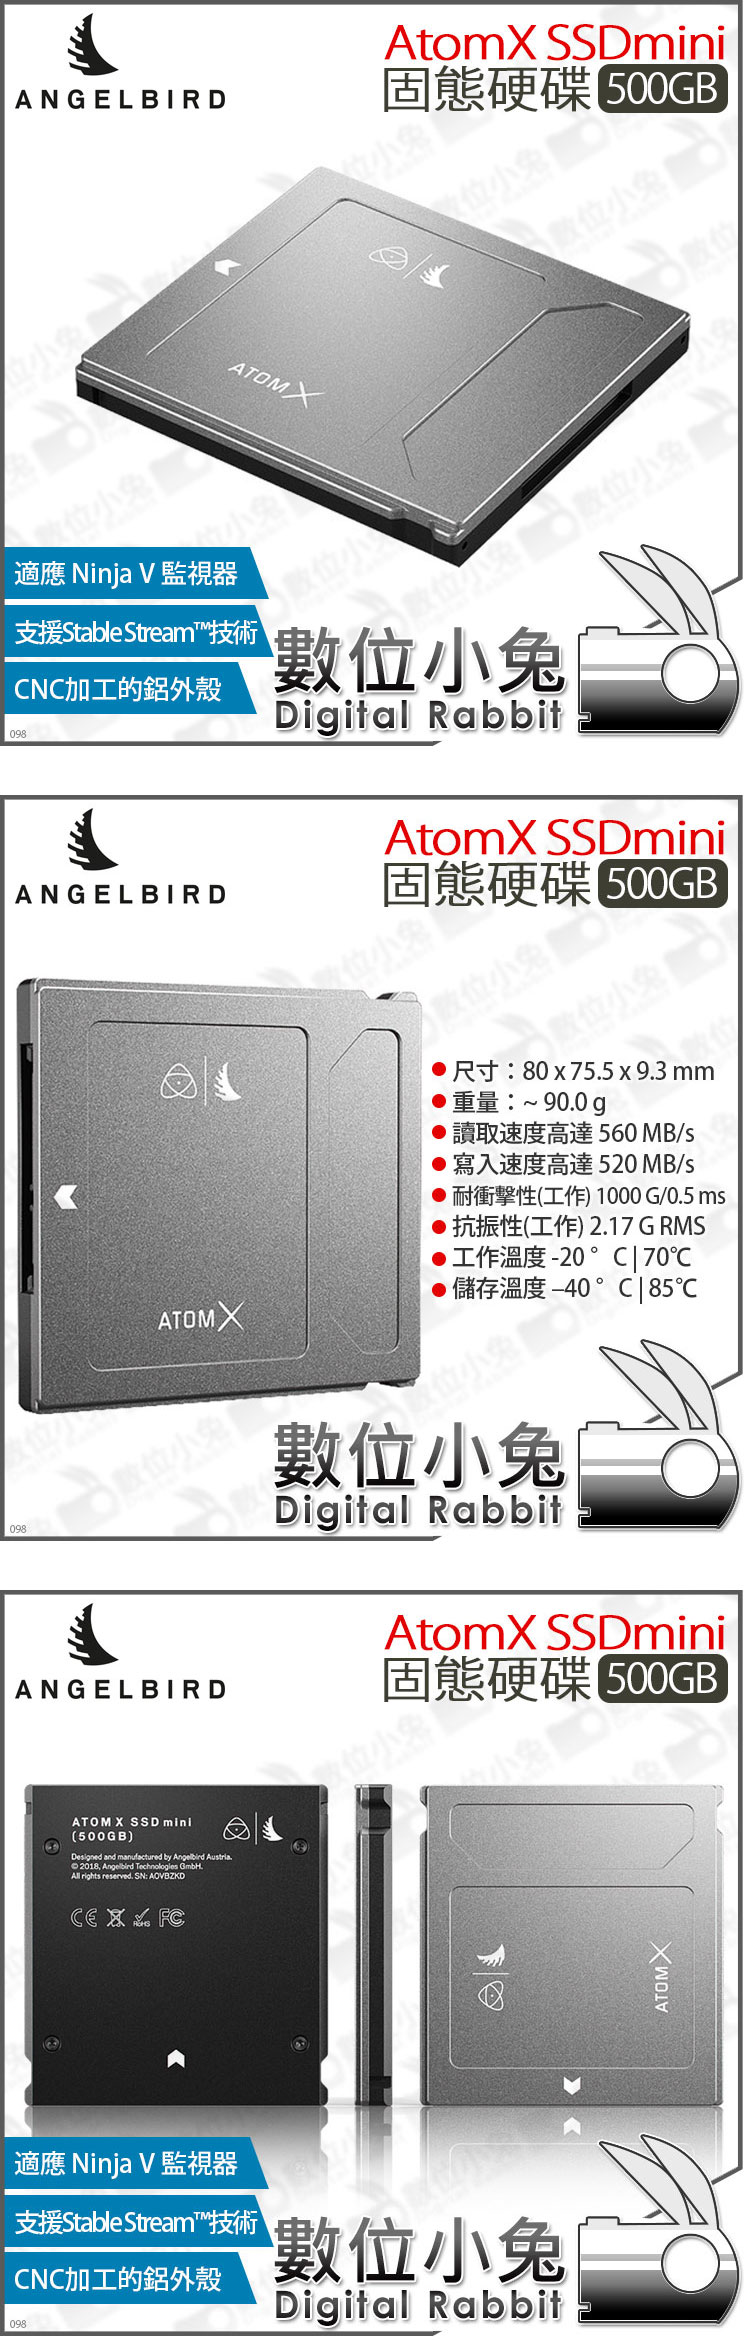 Angelbird AtomX SSDmini 天使鳥固態硬碟